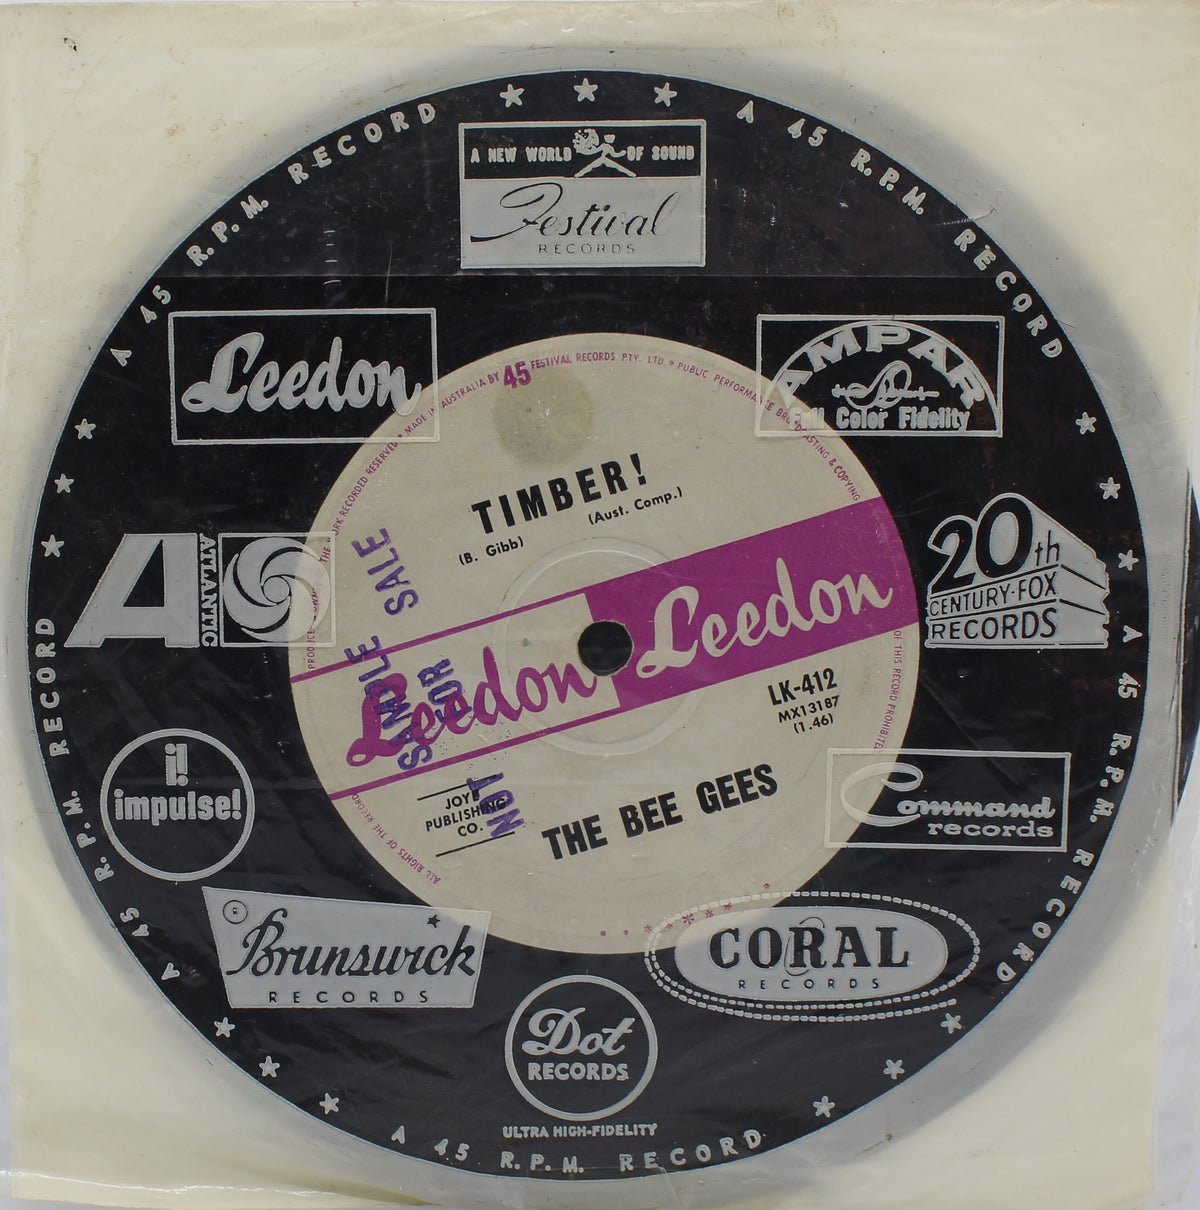 The Bee Gees, Leedon, Timber!, Vinyl Single (45 rpm), Australia 1963 (s 1096)